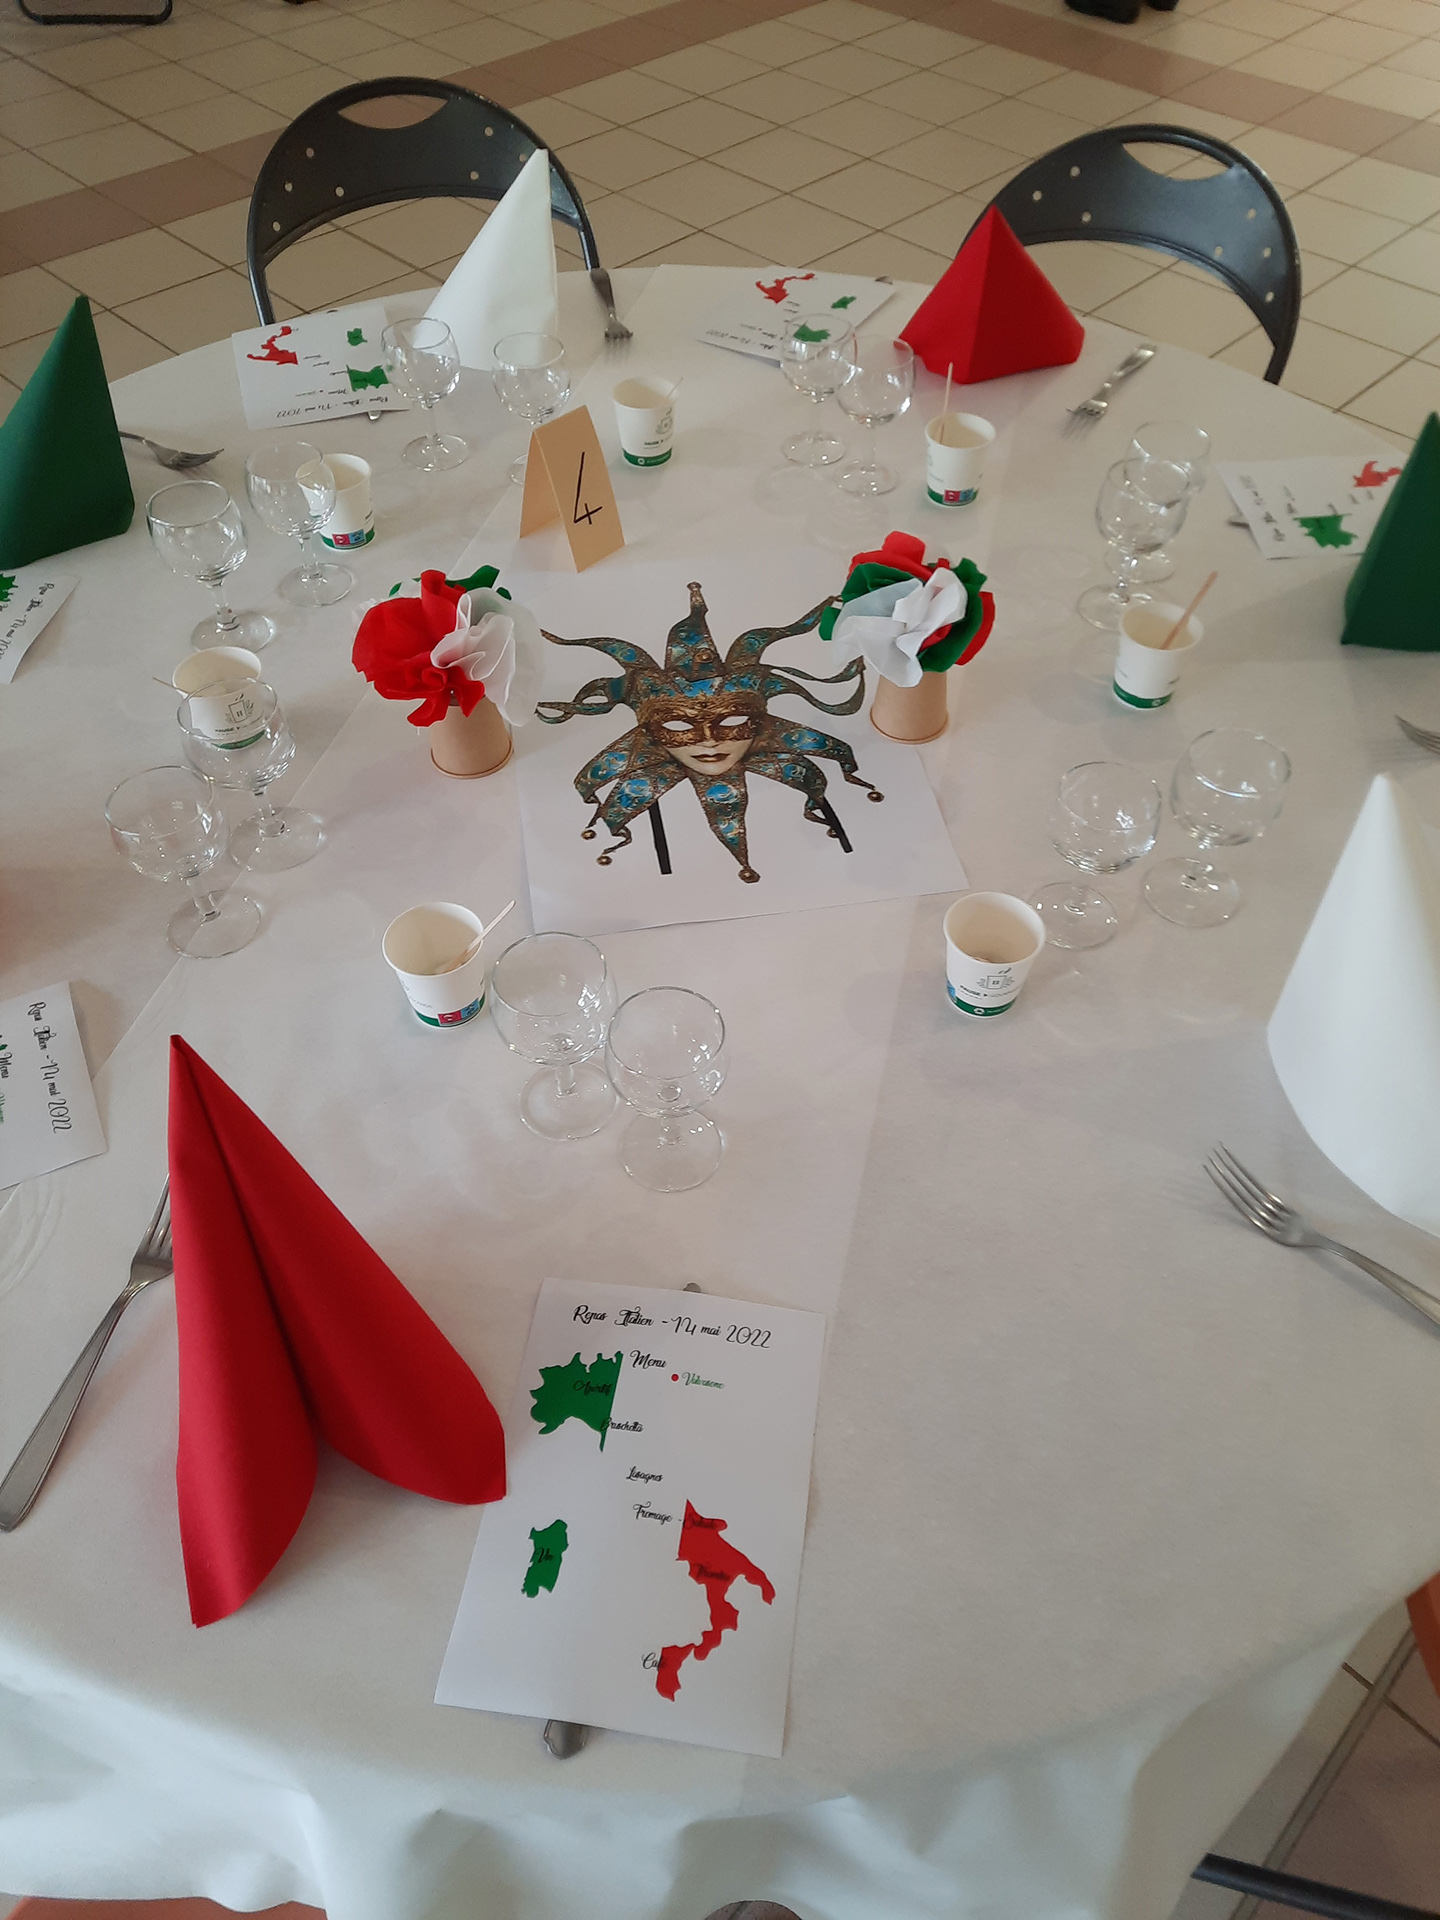 Table repas italien